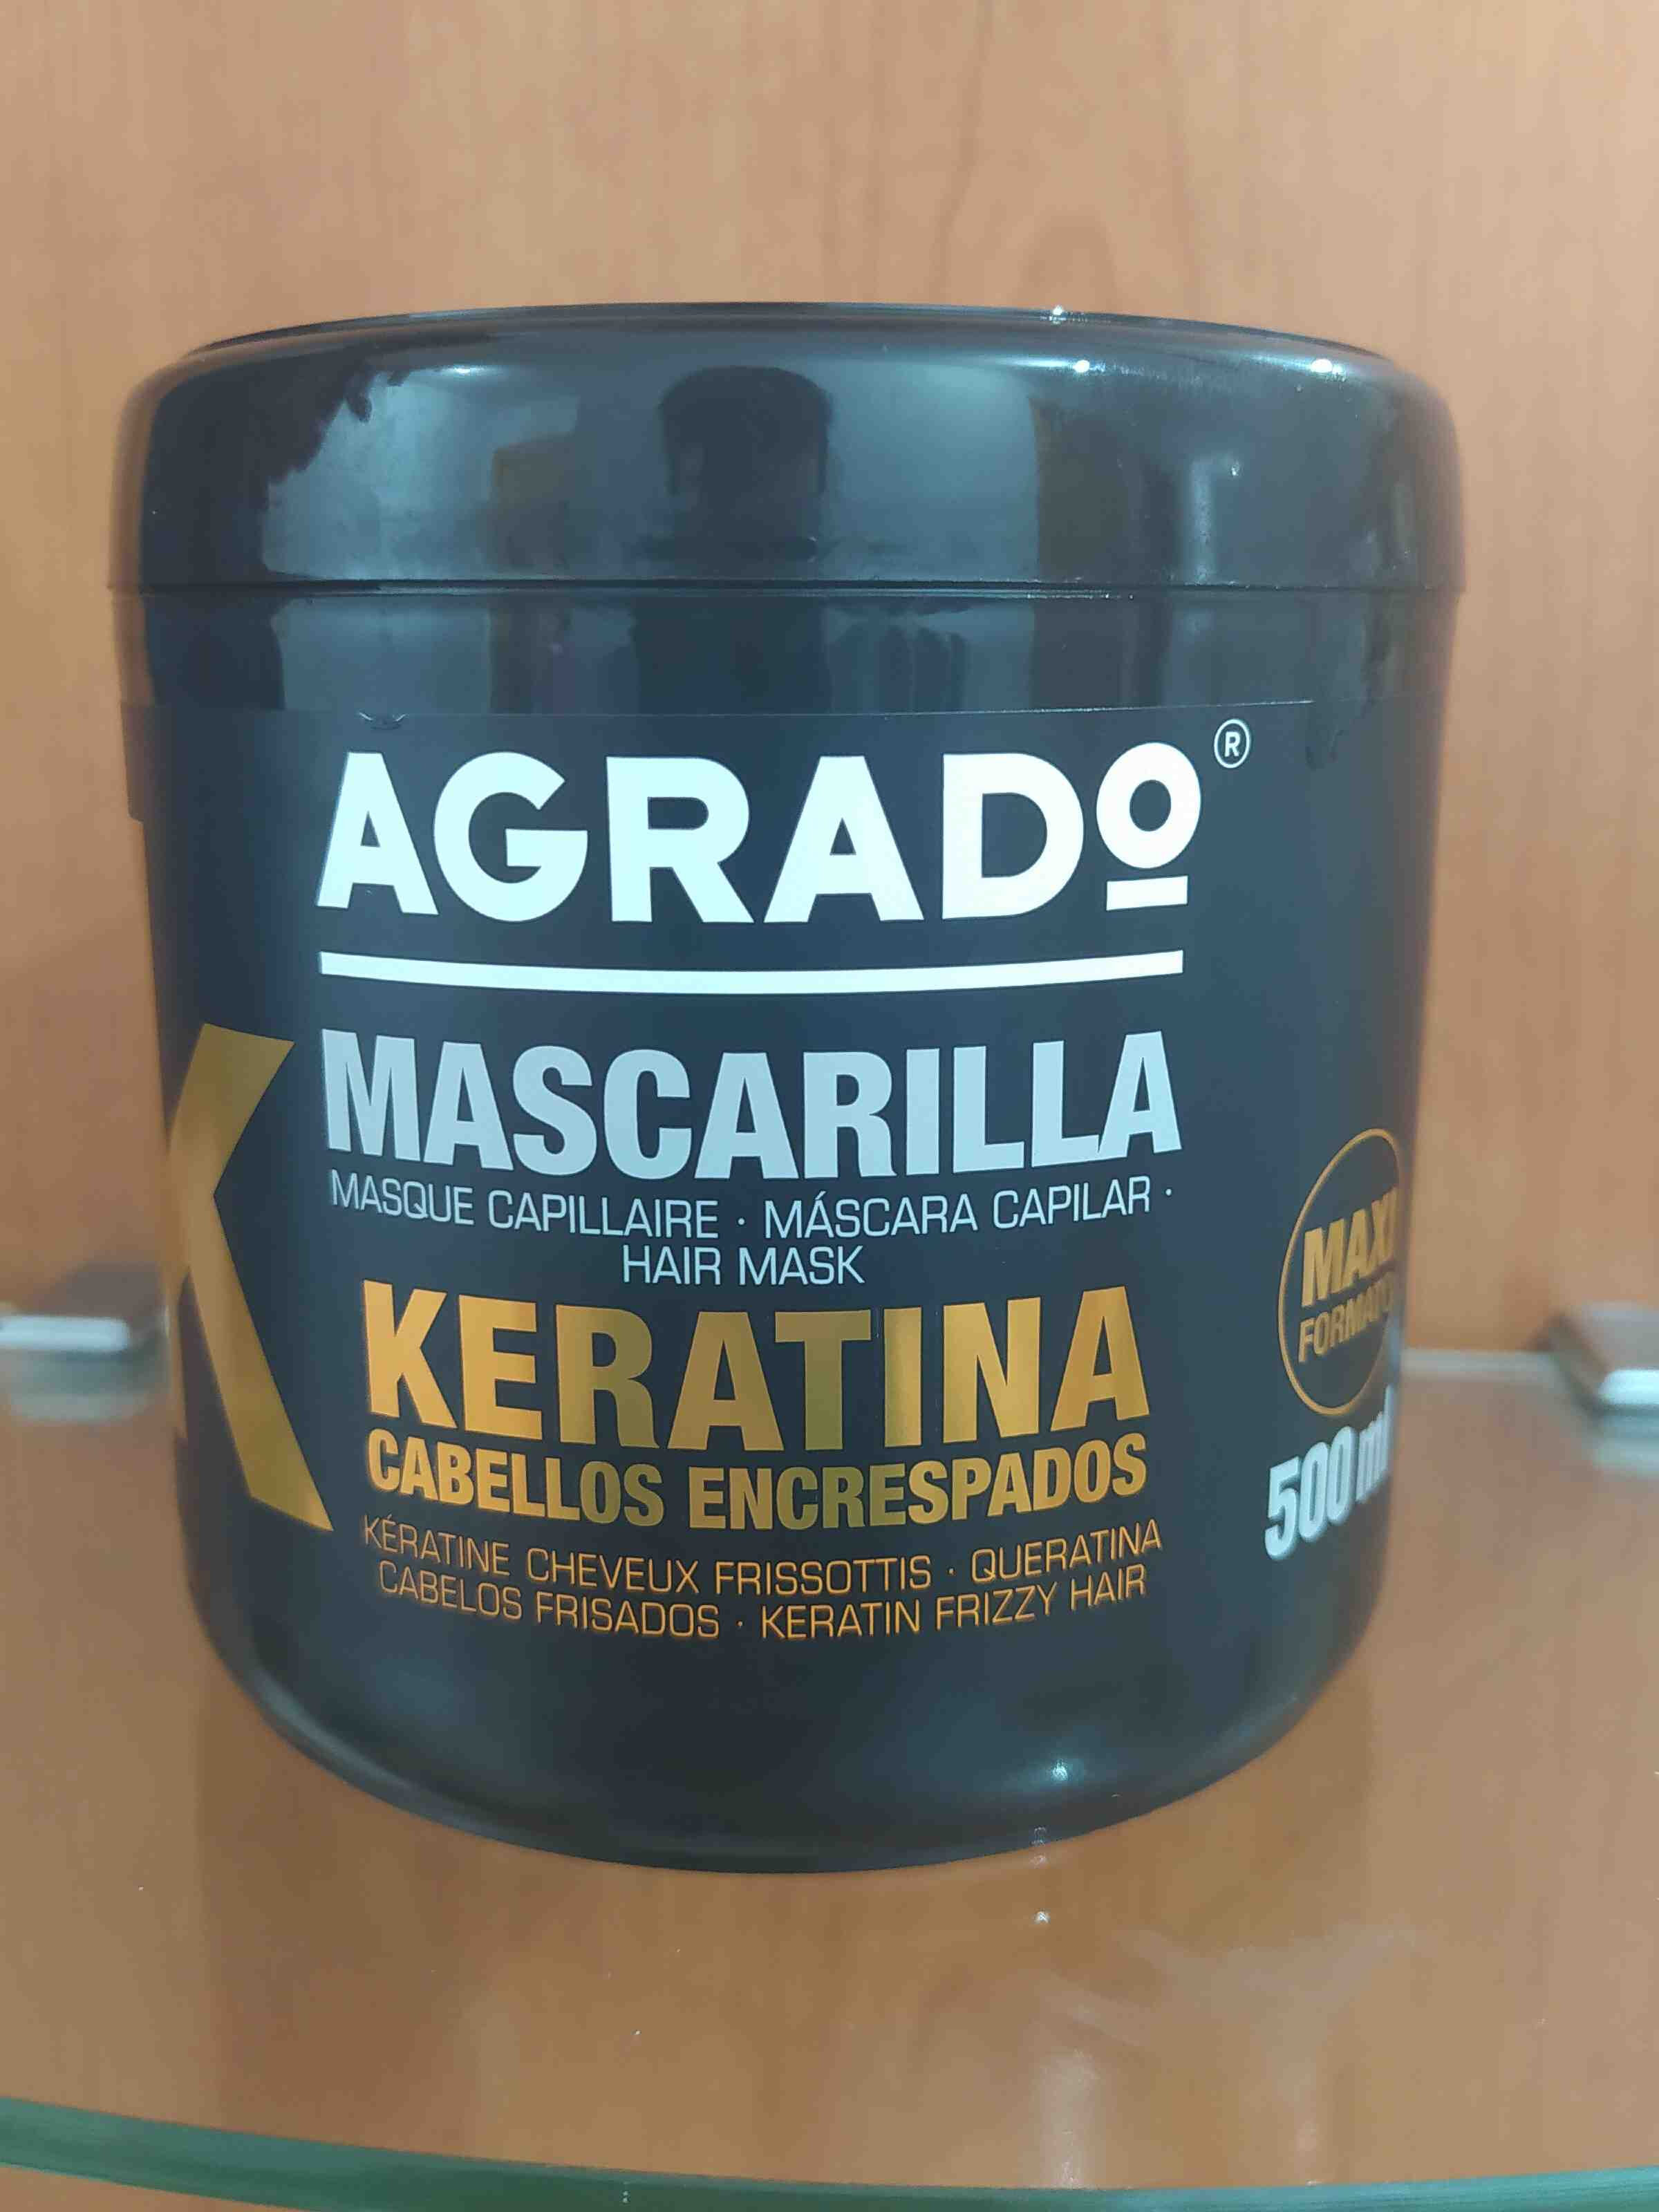 k mascarilla - Product - en